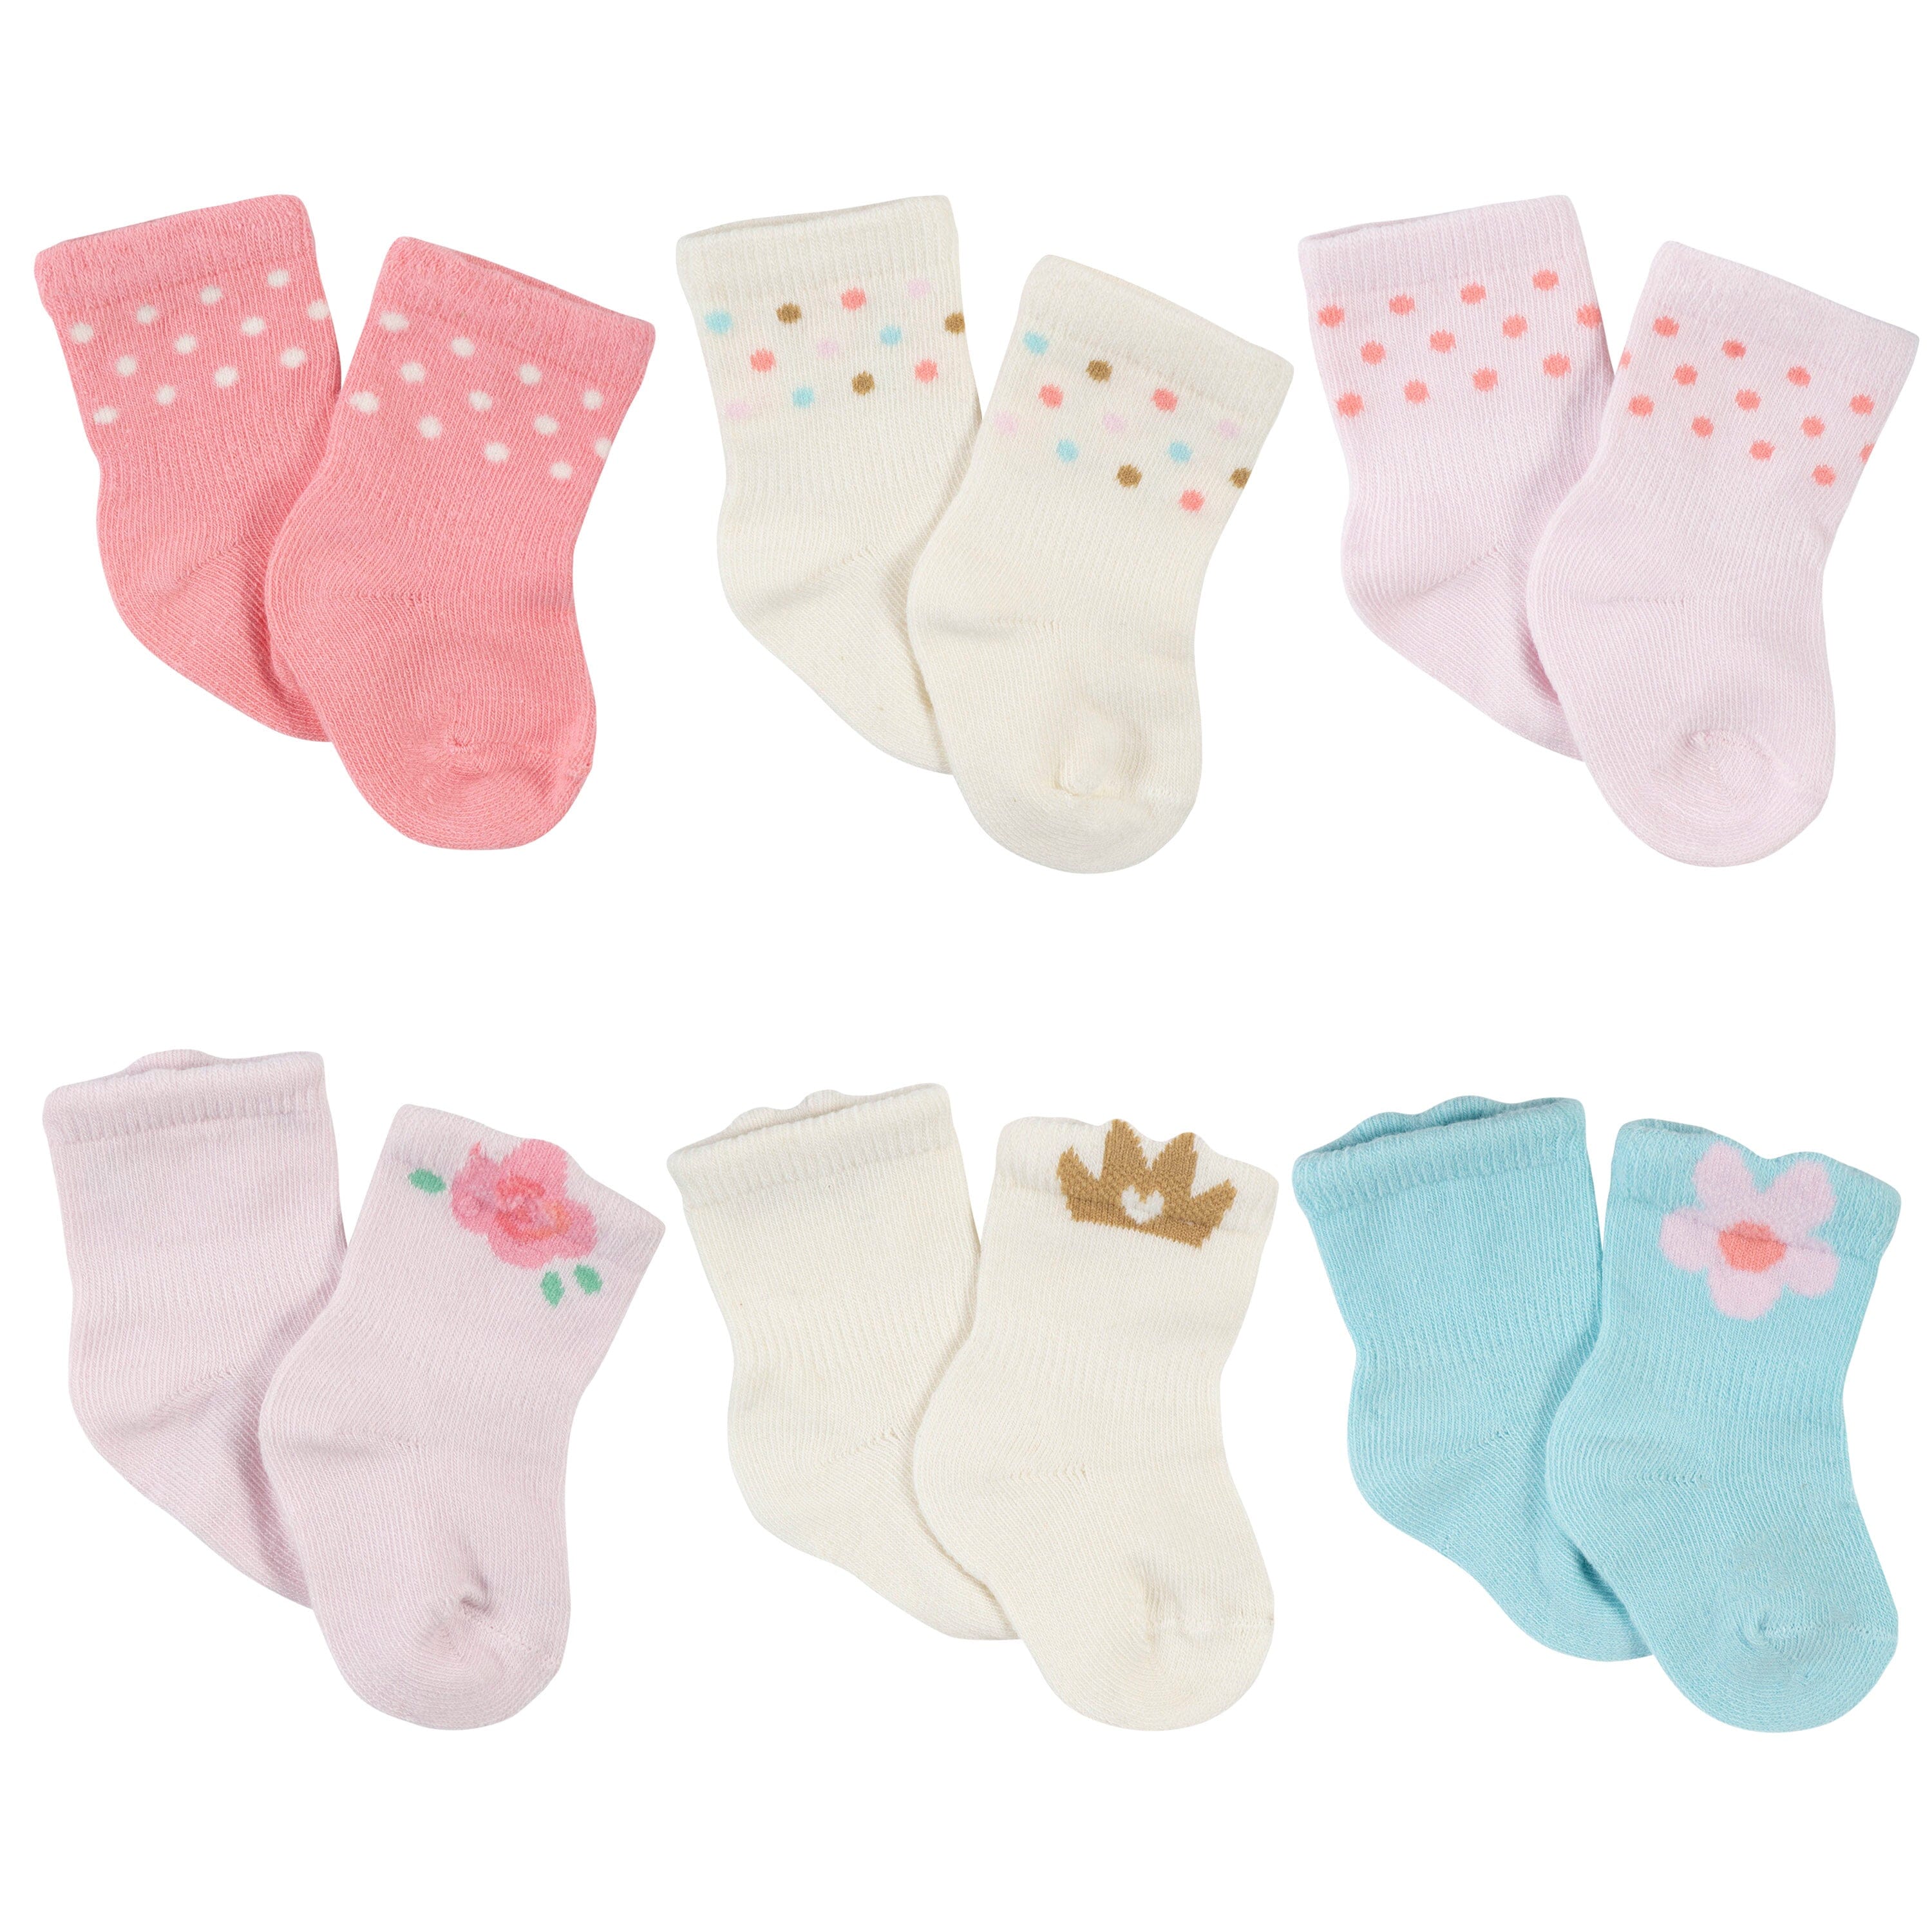 Gerber Baby Girls' 6pk Ballerina Jersey Wiggle Proof Socks - Pink 0-6M